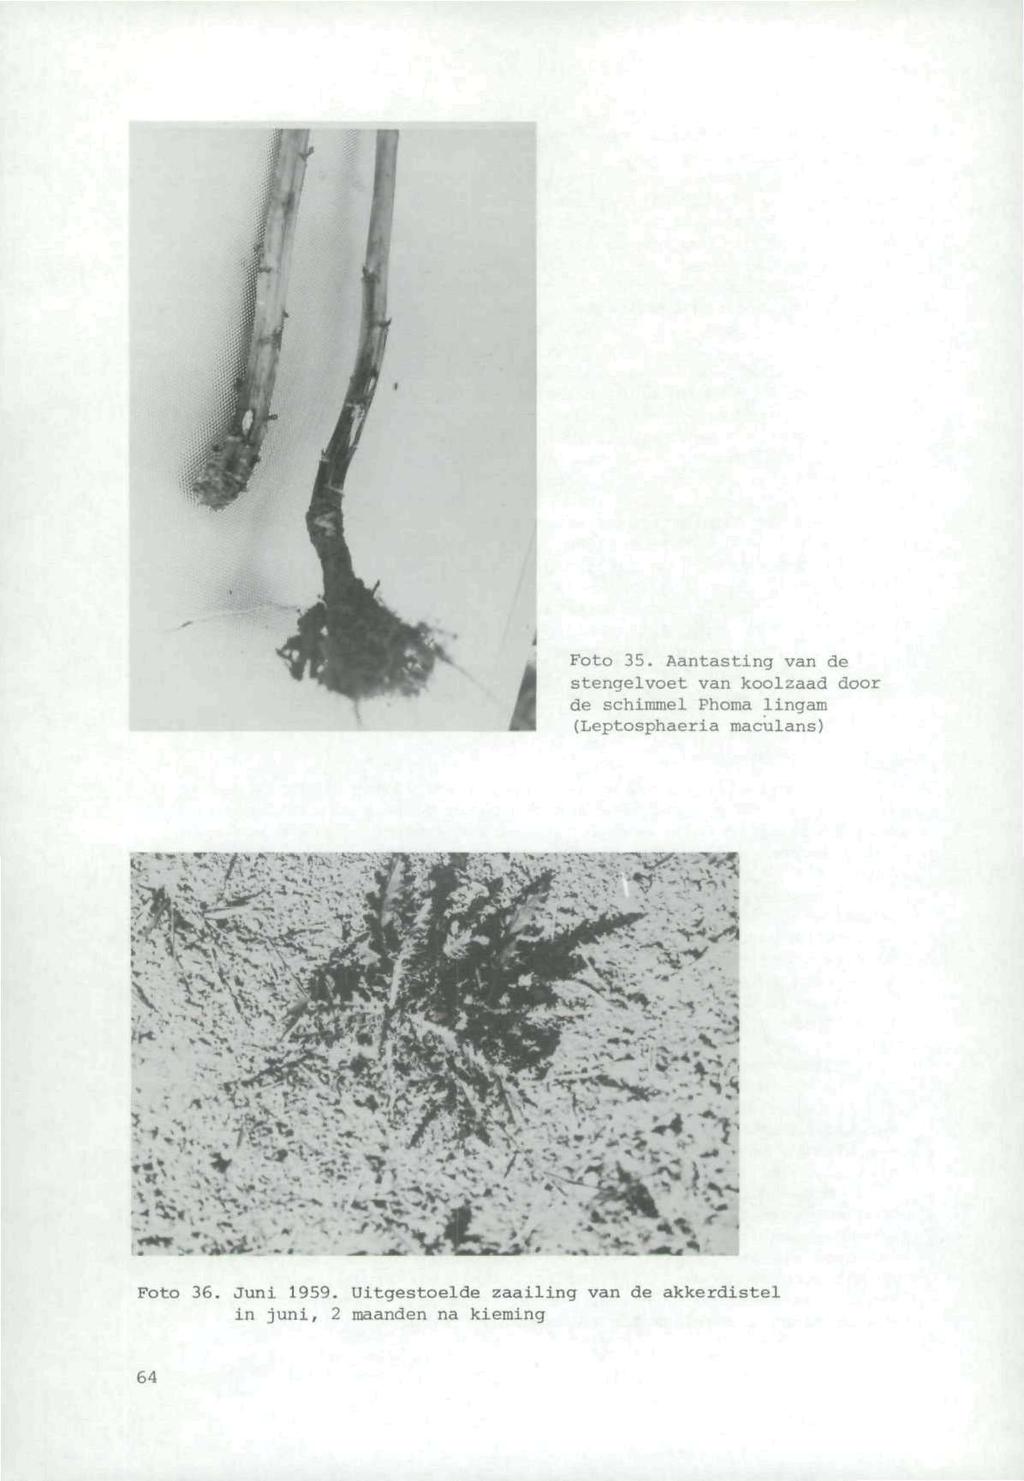 Foto 35. Aantasting van de stengelvoet van koolzaad door de schimmel Phoma lingam (Leptosphaeria maculans) vbiv *- - «.